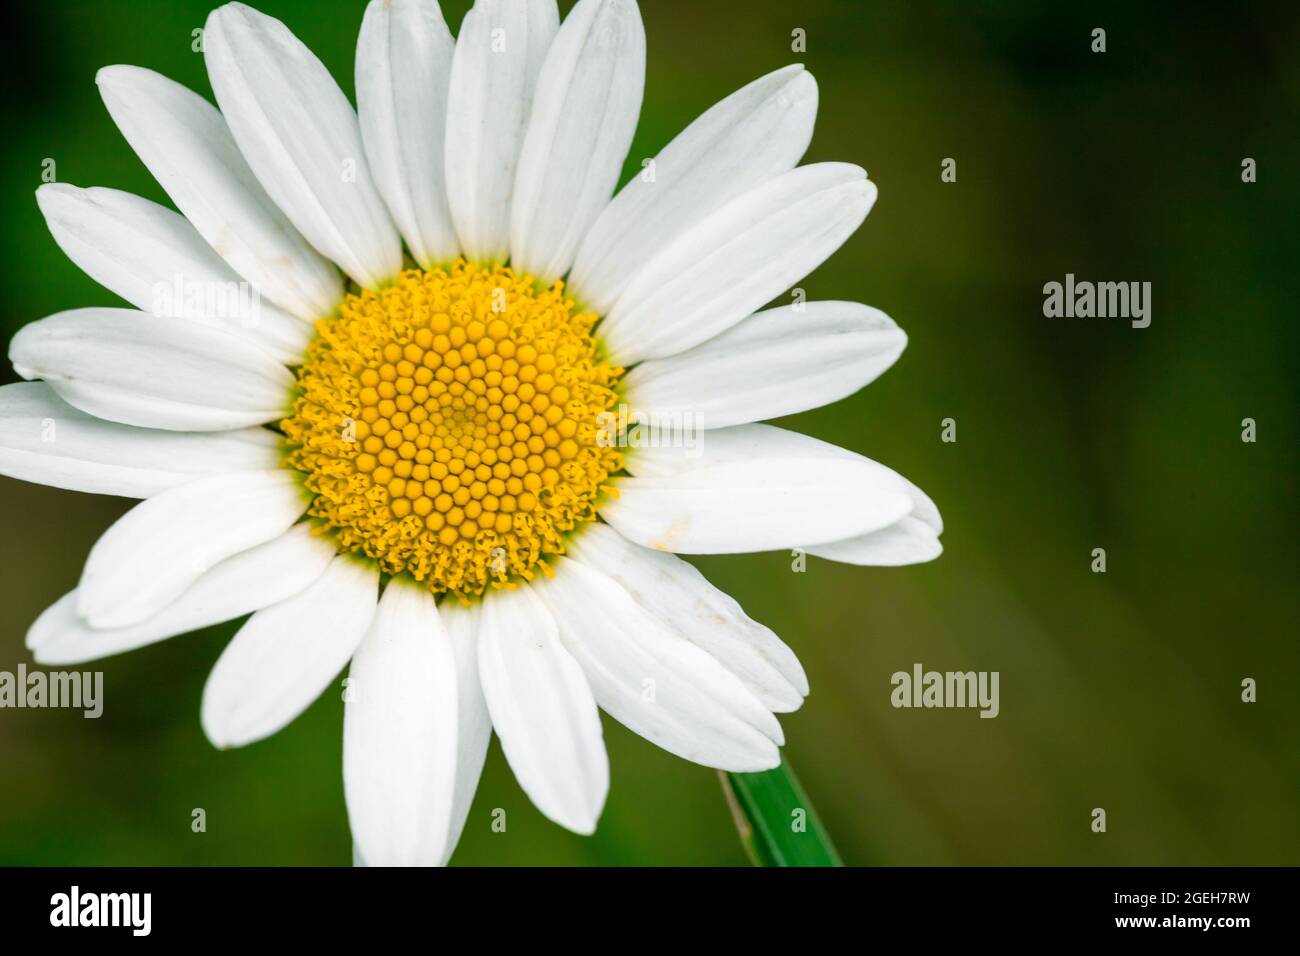 Daisy flower macro photo over blurred green background Stock Photo